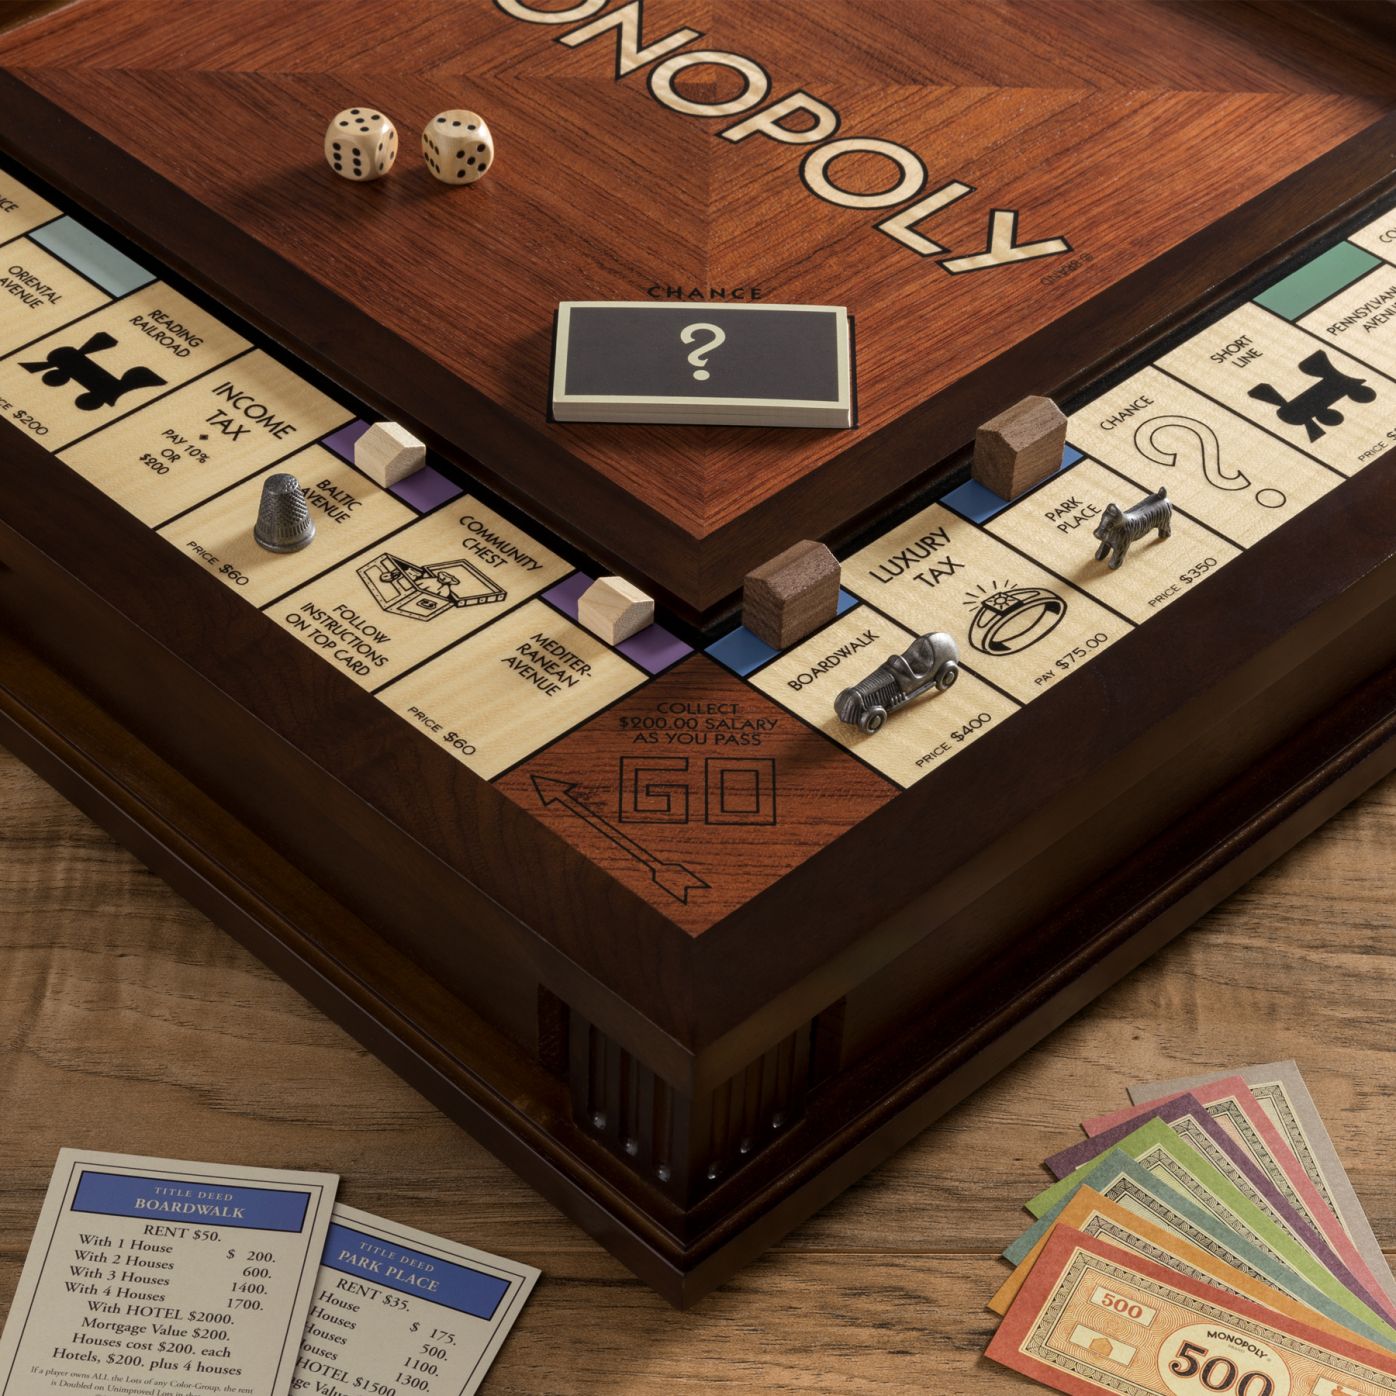 Walnut color desk top board game Monopoly